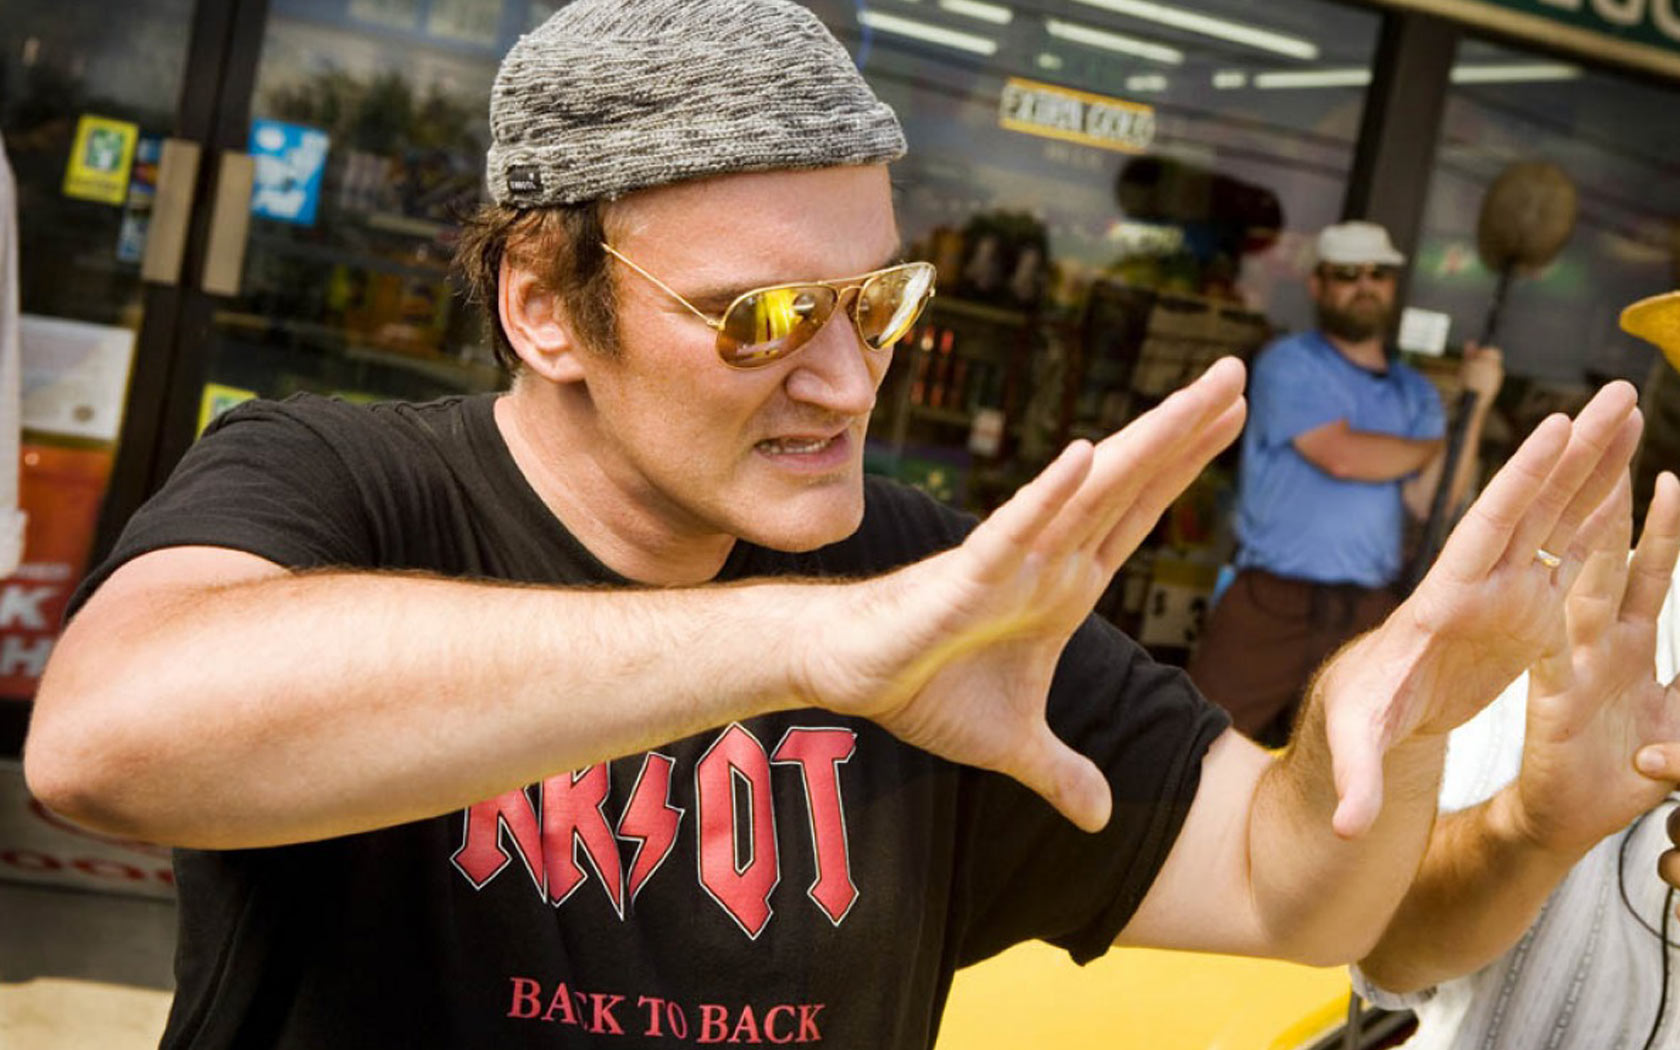 Star Trek : le film de Tarantino paraît compromis